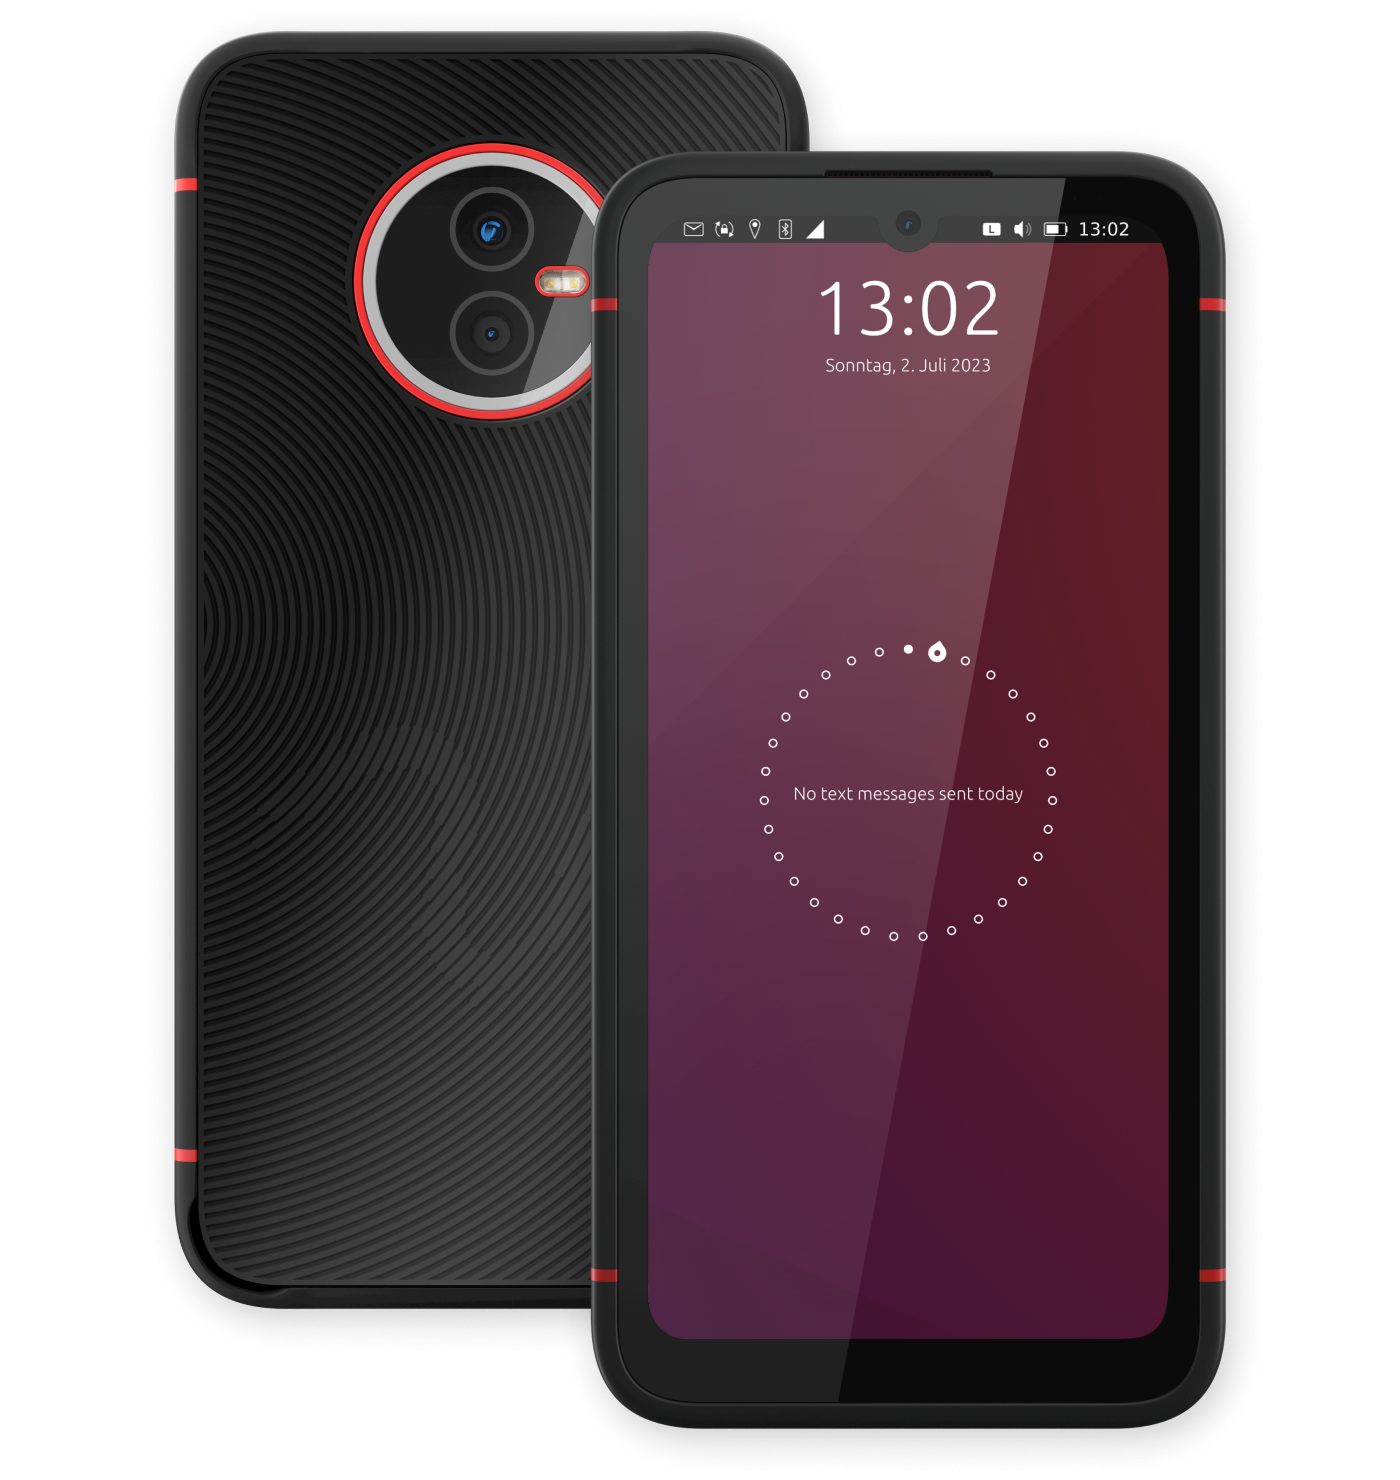 Volla – Phone X23 mit Ubuntu Touch Smartphone